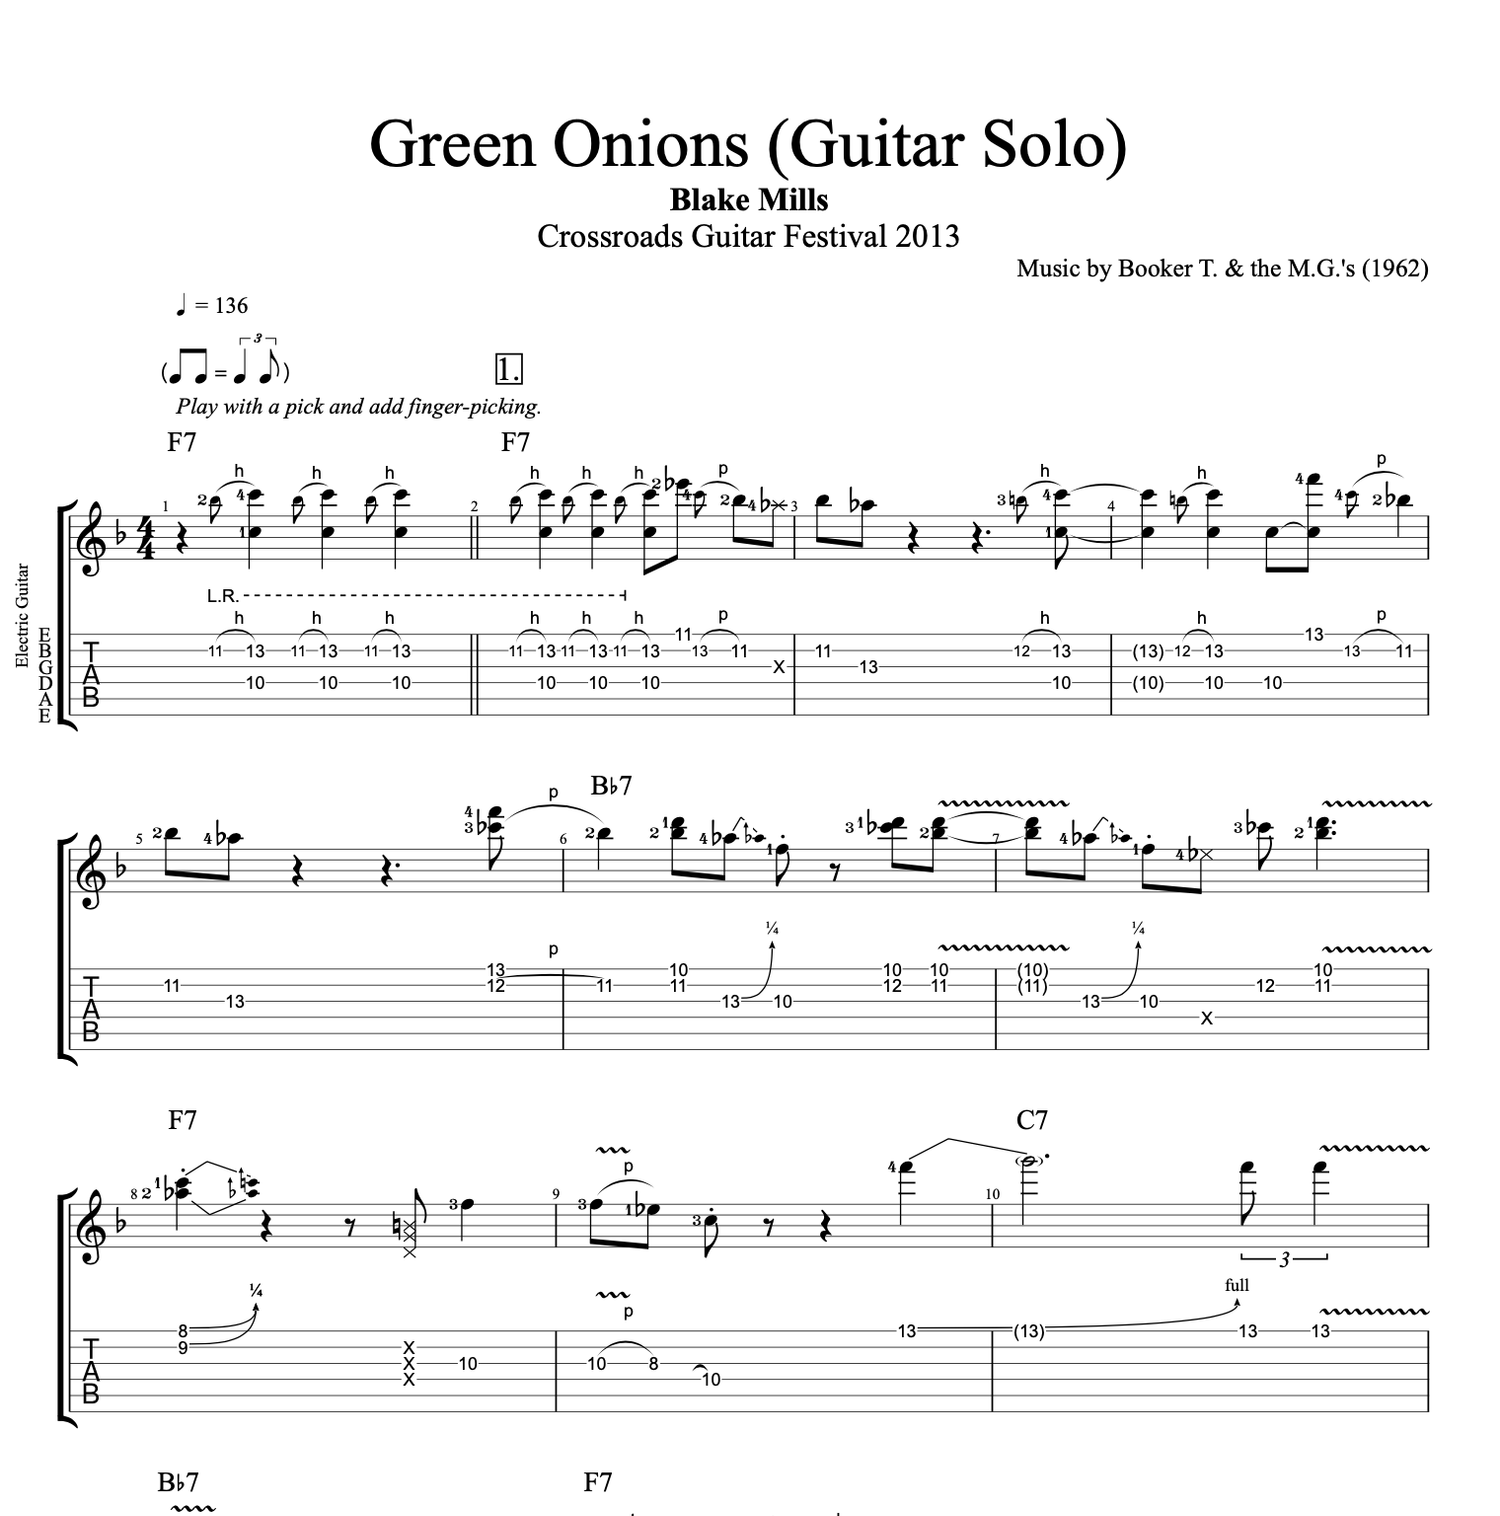 Cross Road Blues (Crossroads) Sheet Music | Robert Johnson | Guitar  Chords/Lyrics